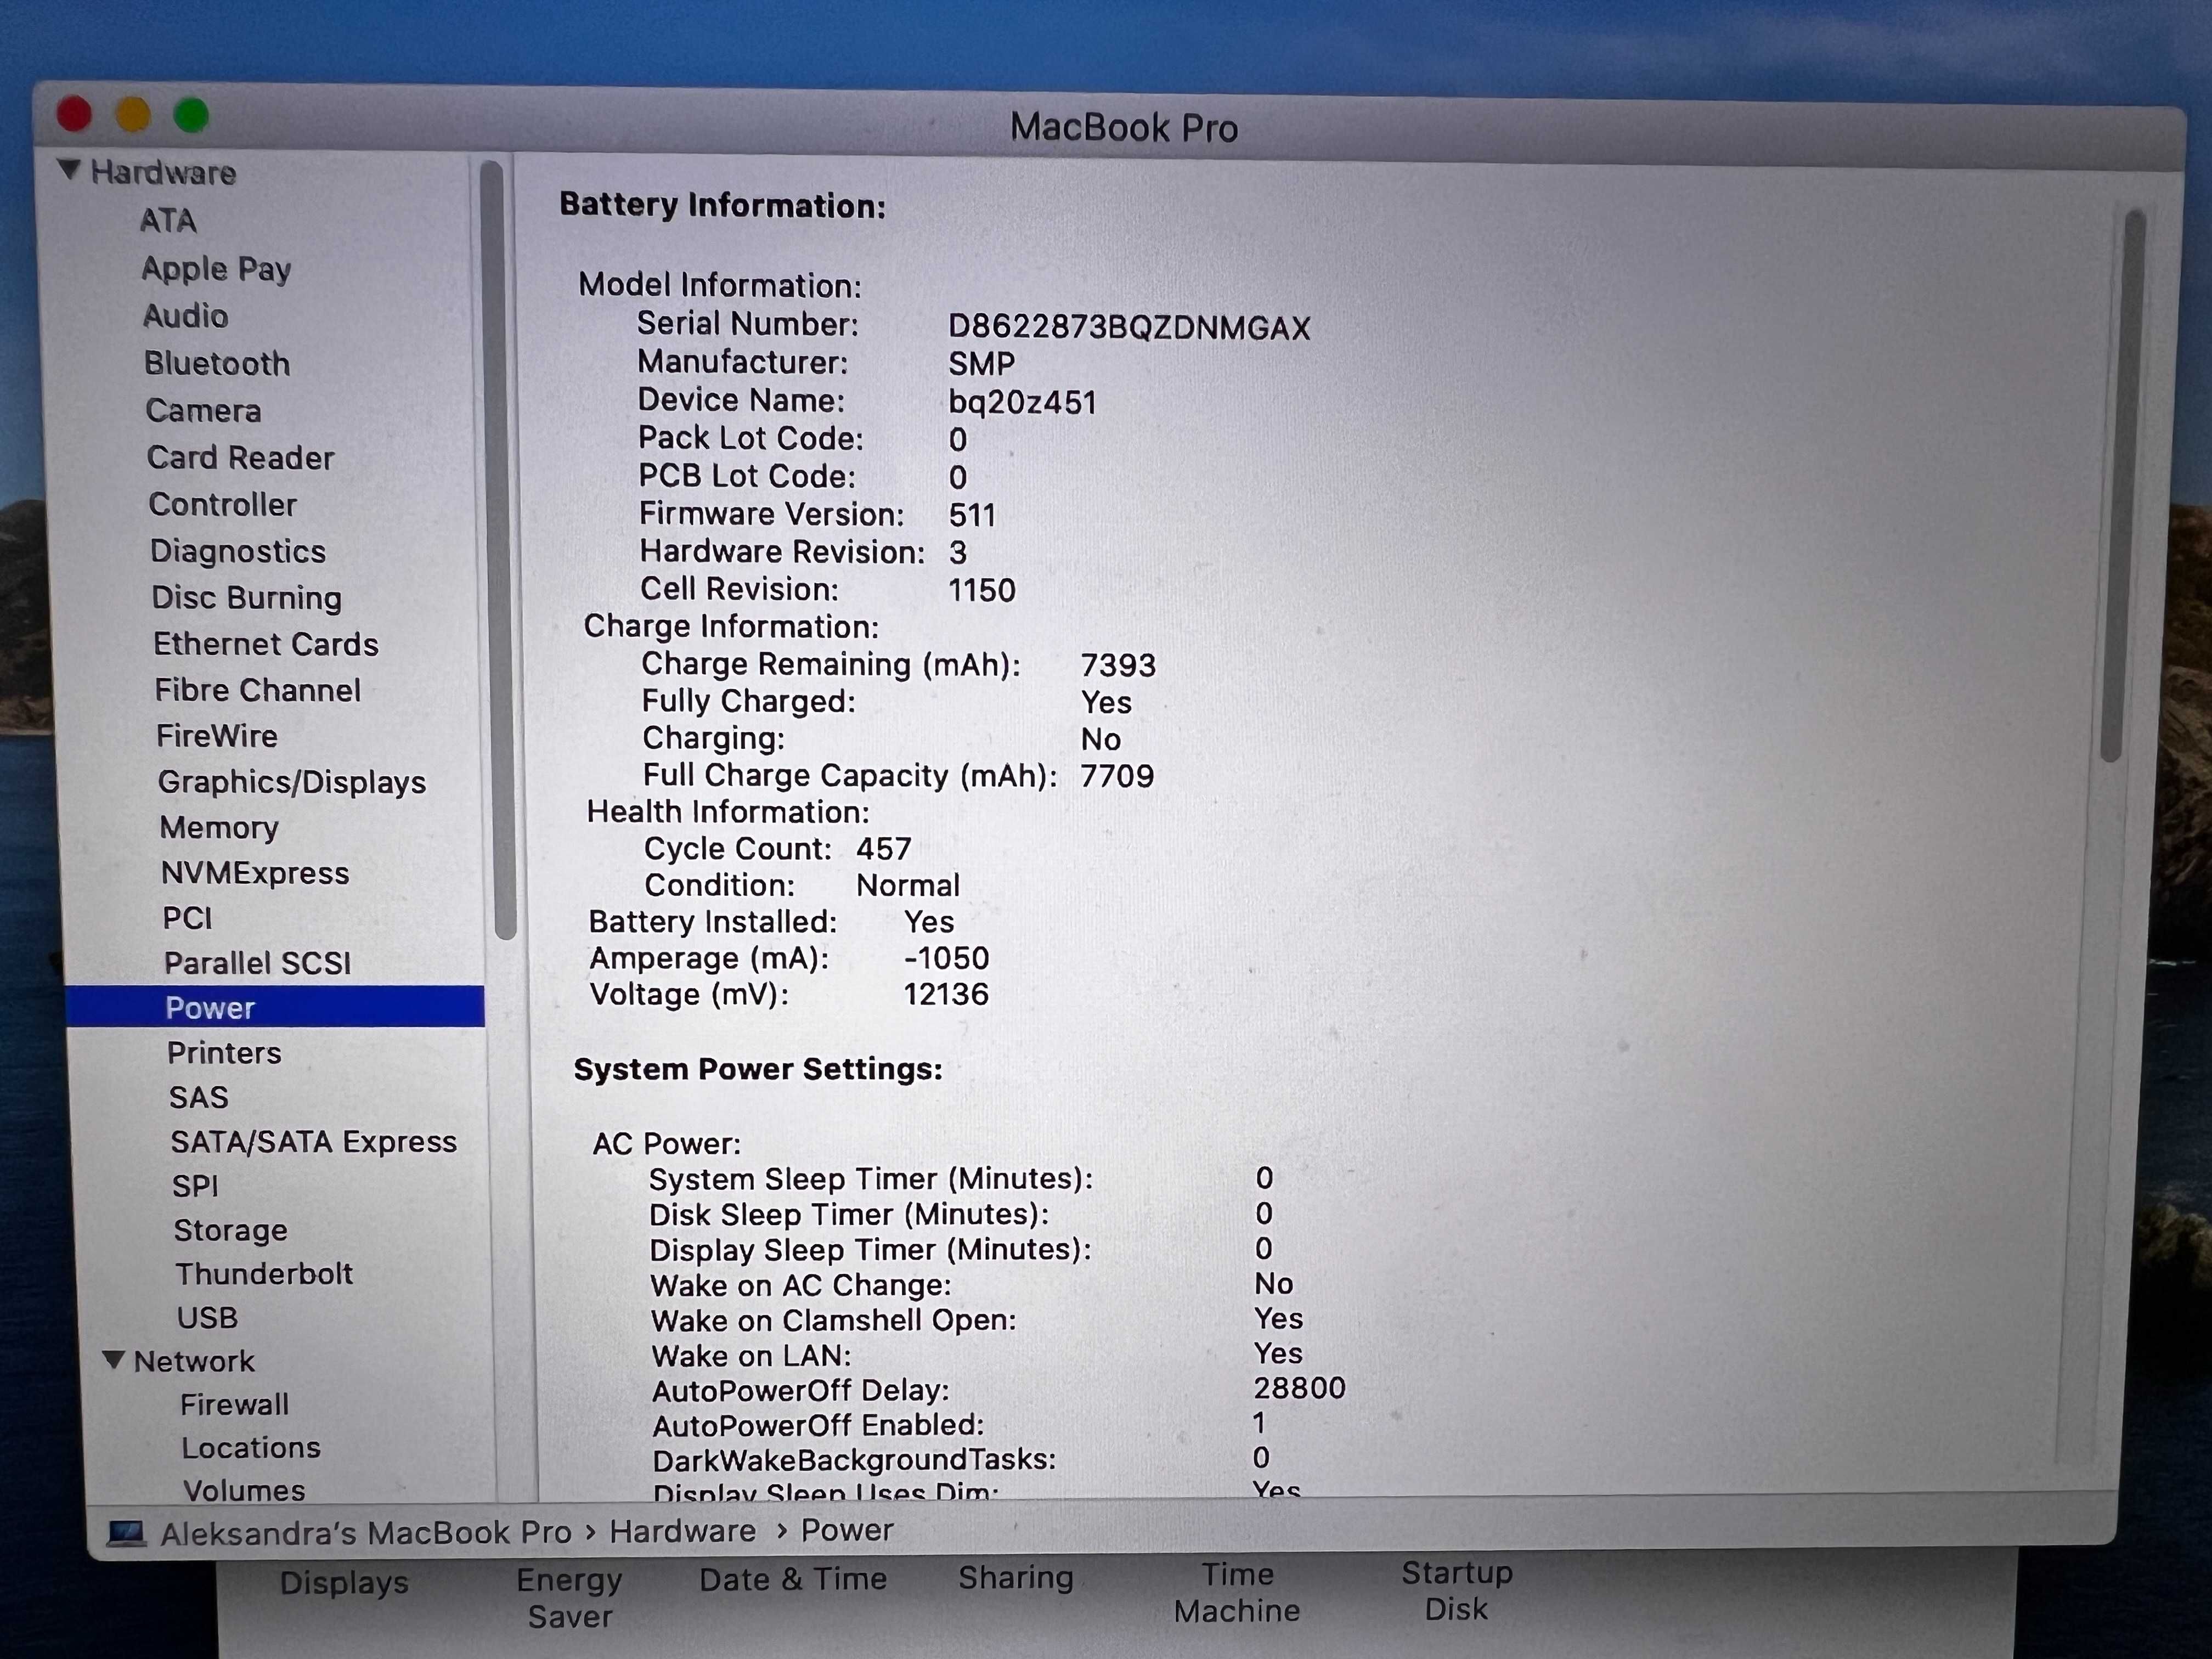 MacBook Pro Retina 2012, 15,4'', i7 2.3, 16GB RAM, 256GB HDD (А1398)